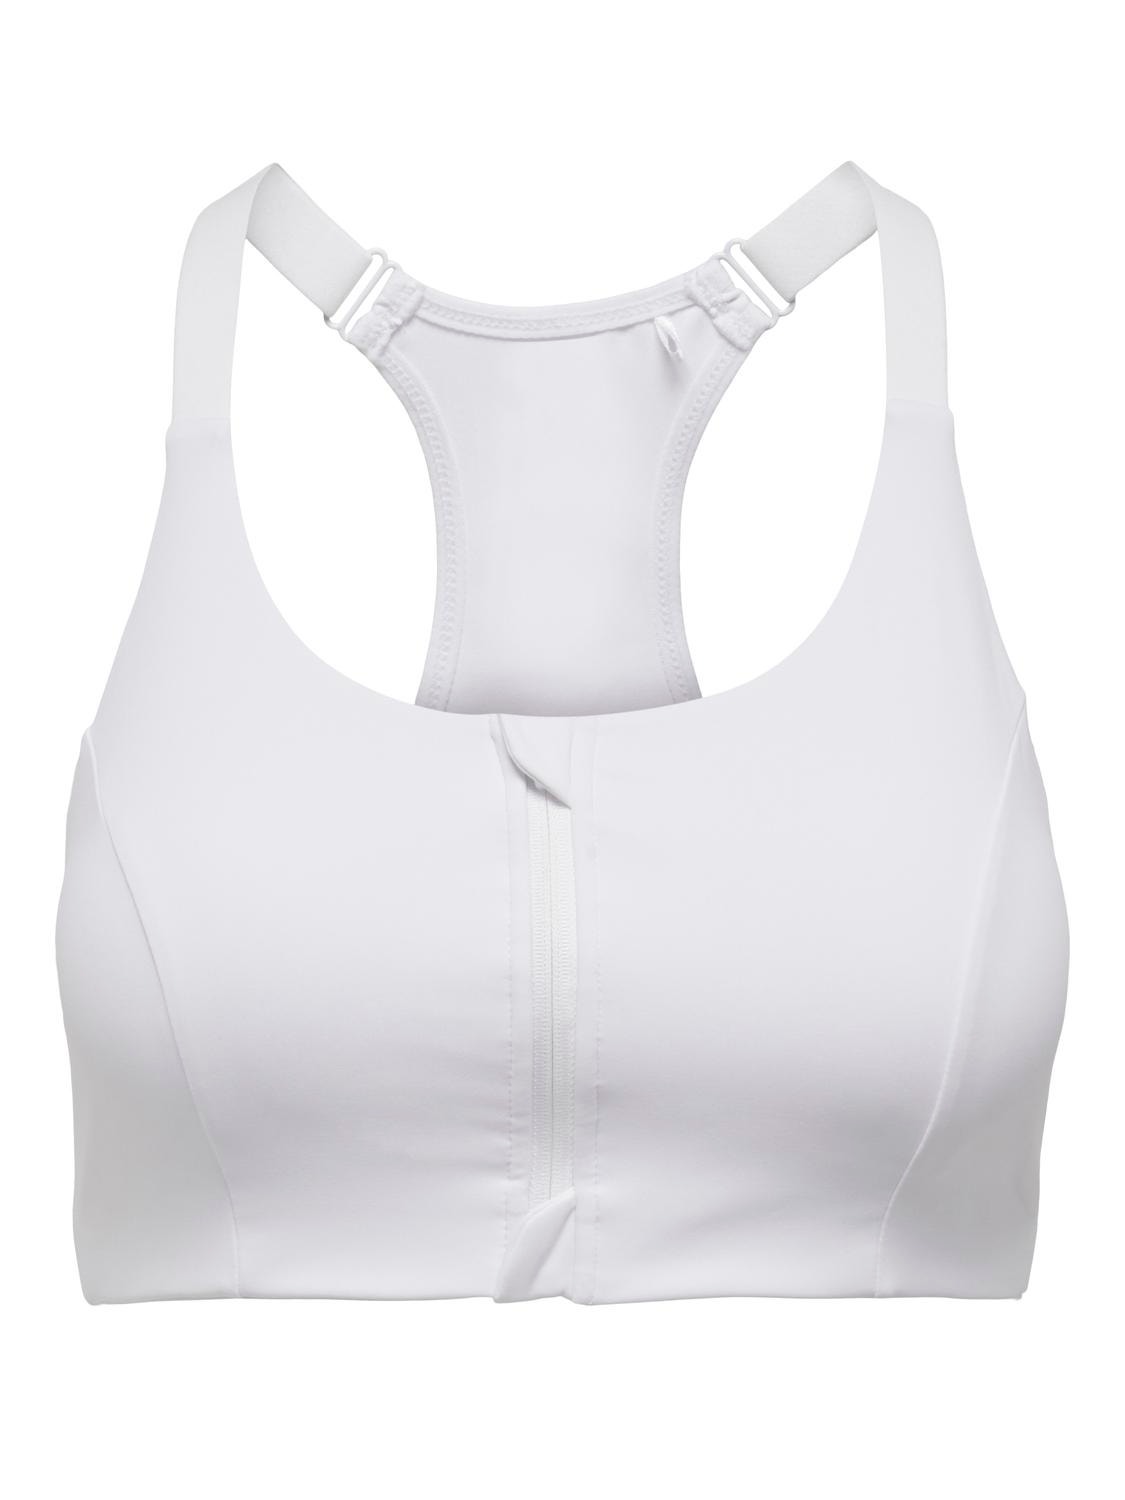 Cotton bra with adjustable straps - White - Sz. 85E-115H - Zizzifashion